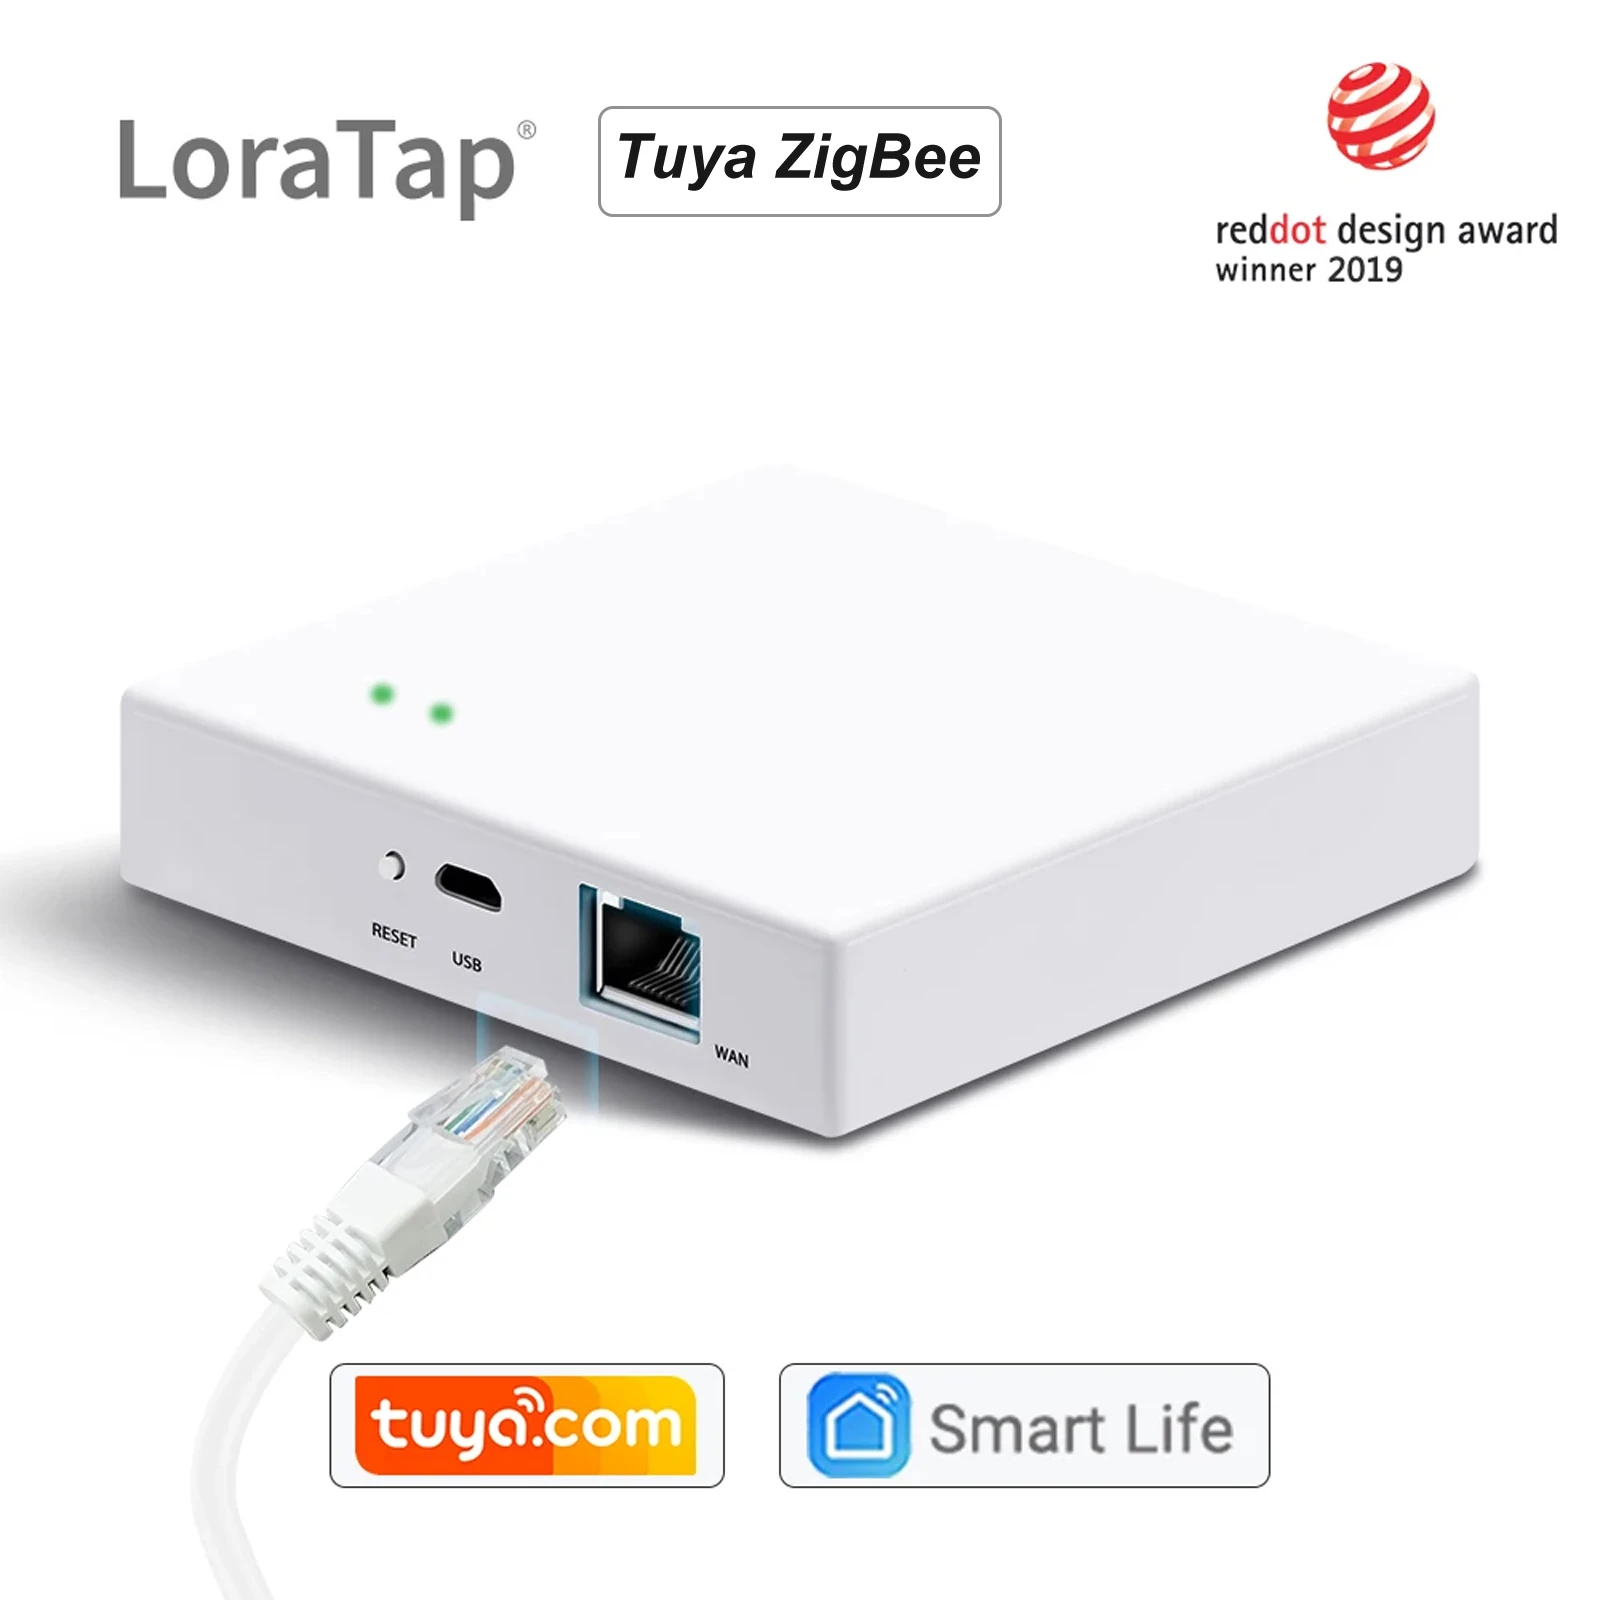 LoraTap Smart Home Tuya ZigBee Gateway Hub Bridge with Network Interface Smart Life App Remote Control Devices up to 256 Mesh